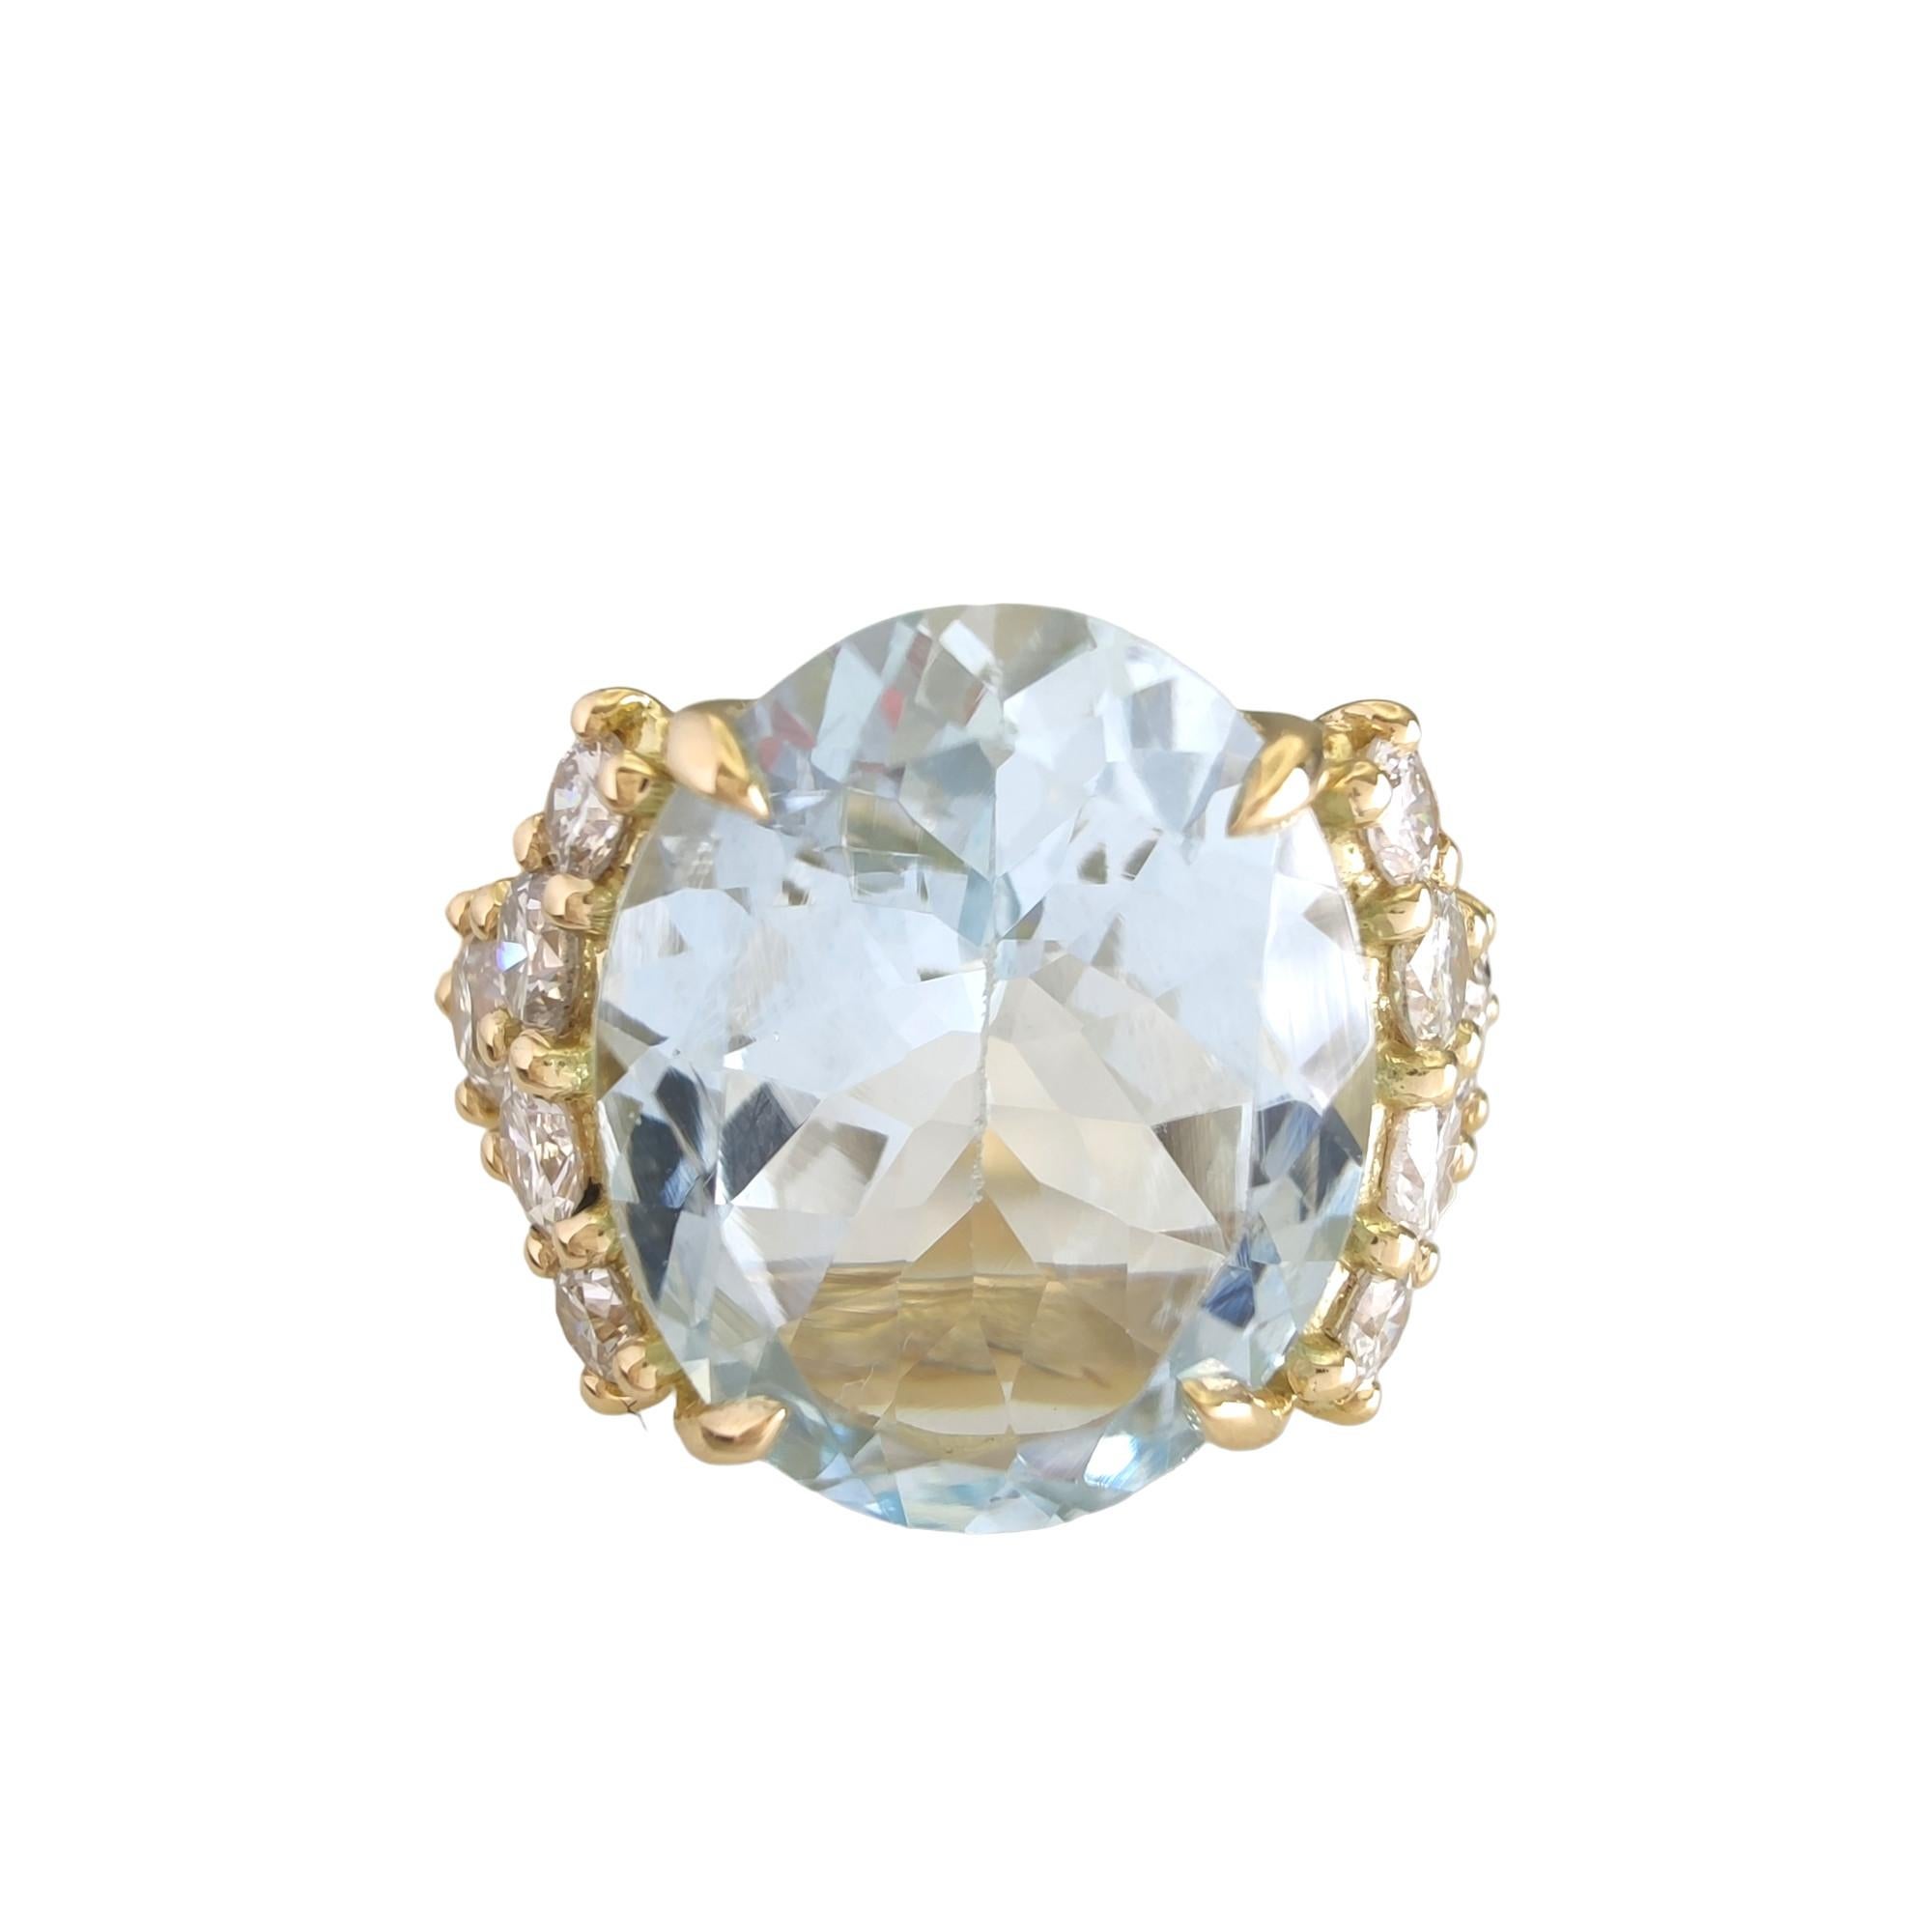 2.69 Carat Aquamarine and 0.25 Carat Diamond Ring in 18k Yellow Gold For Sale 2